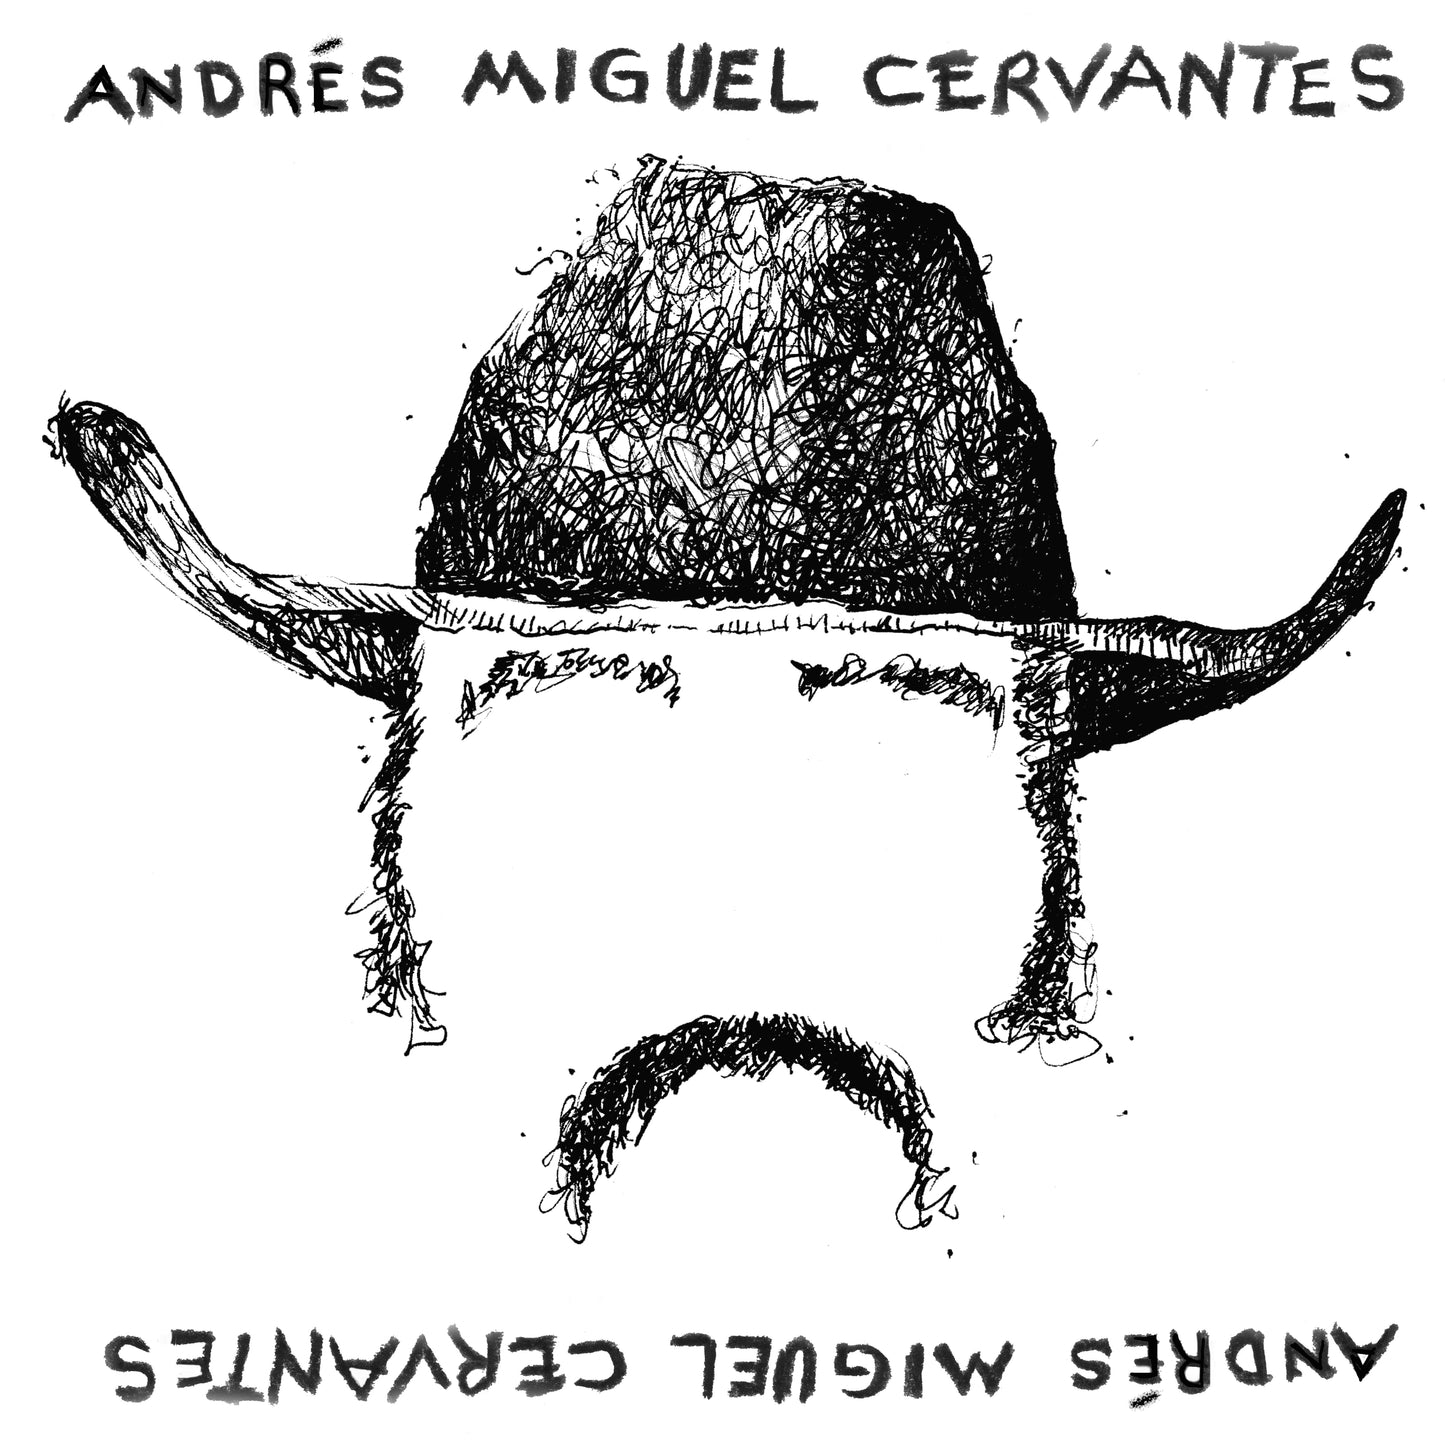 "A Coal For Caring" by Andrés Miguel Cervantes - 7" Single